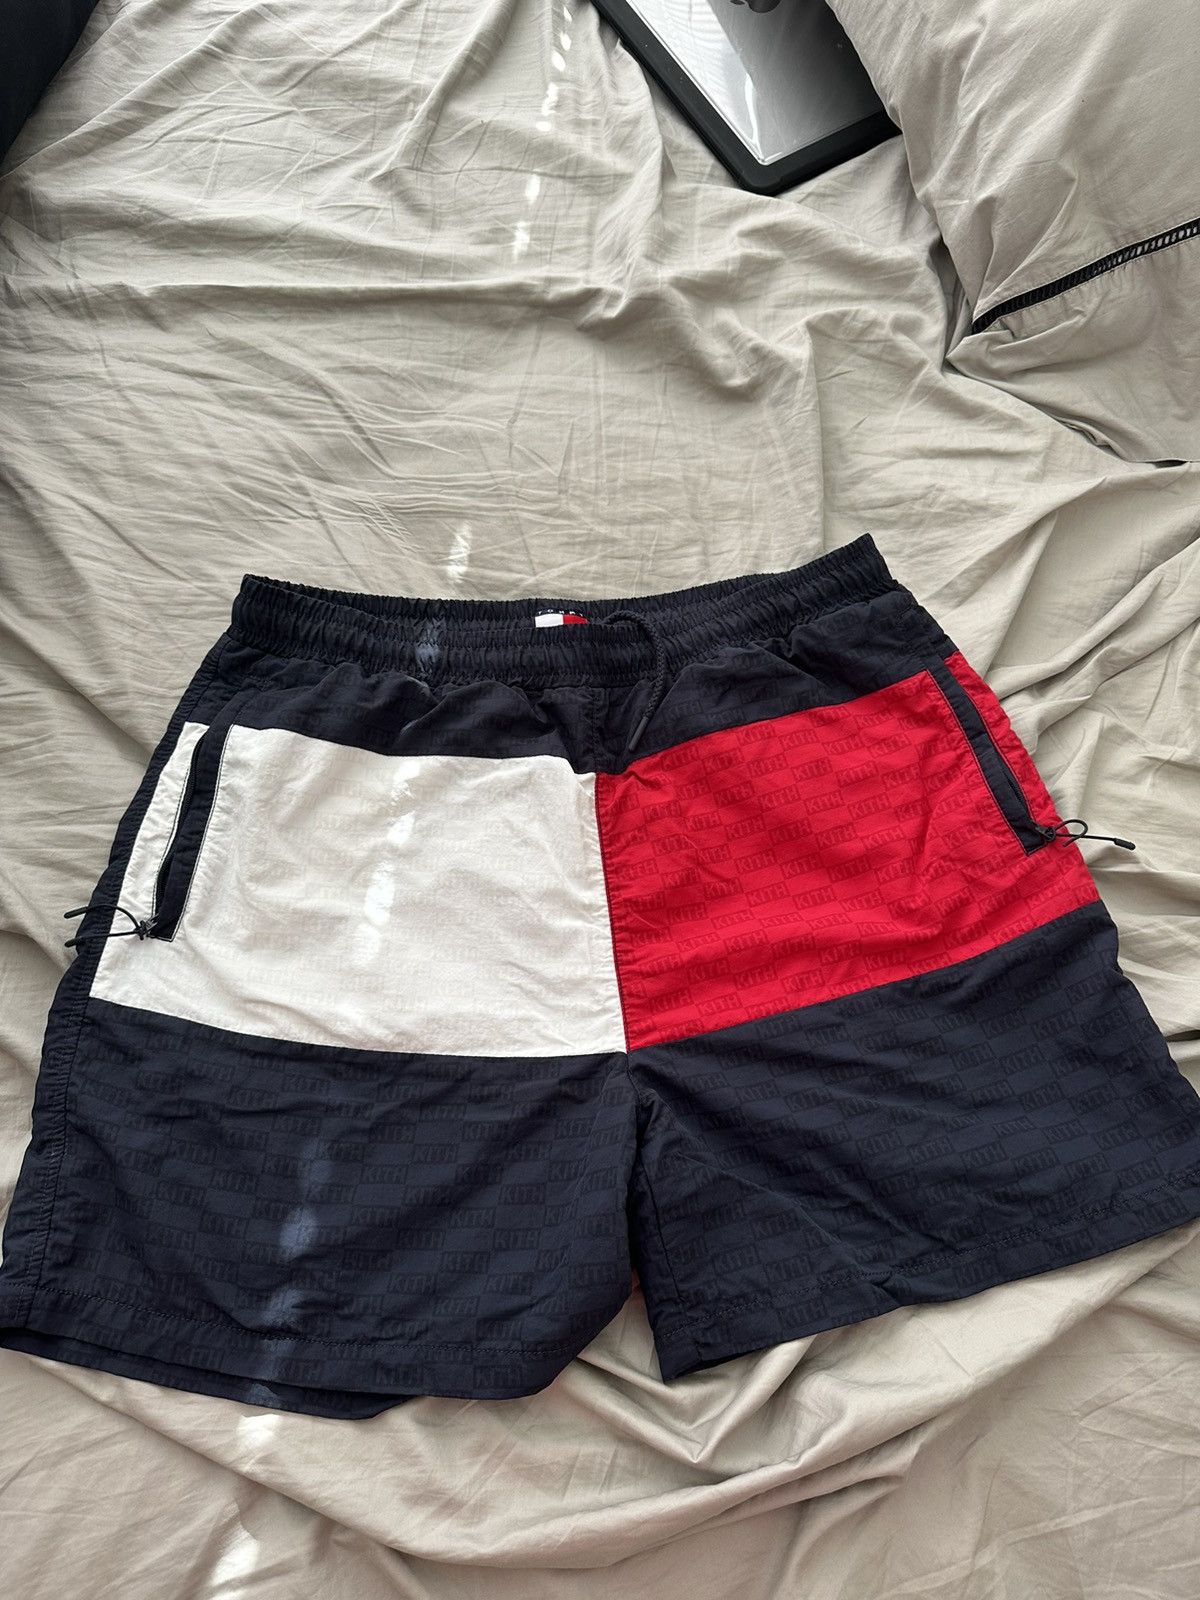 Kith Kith Tommy Hilfiger Shorts | Grailed